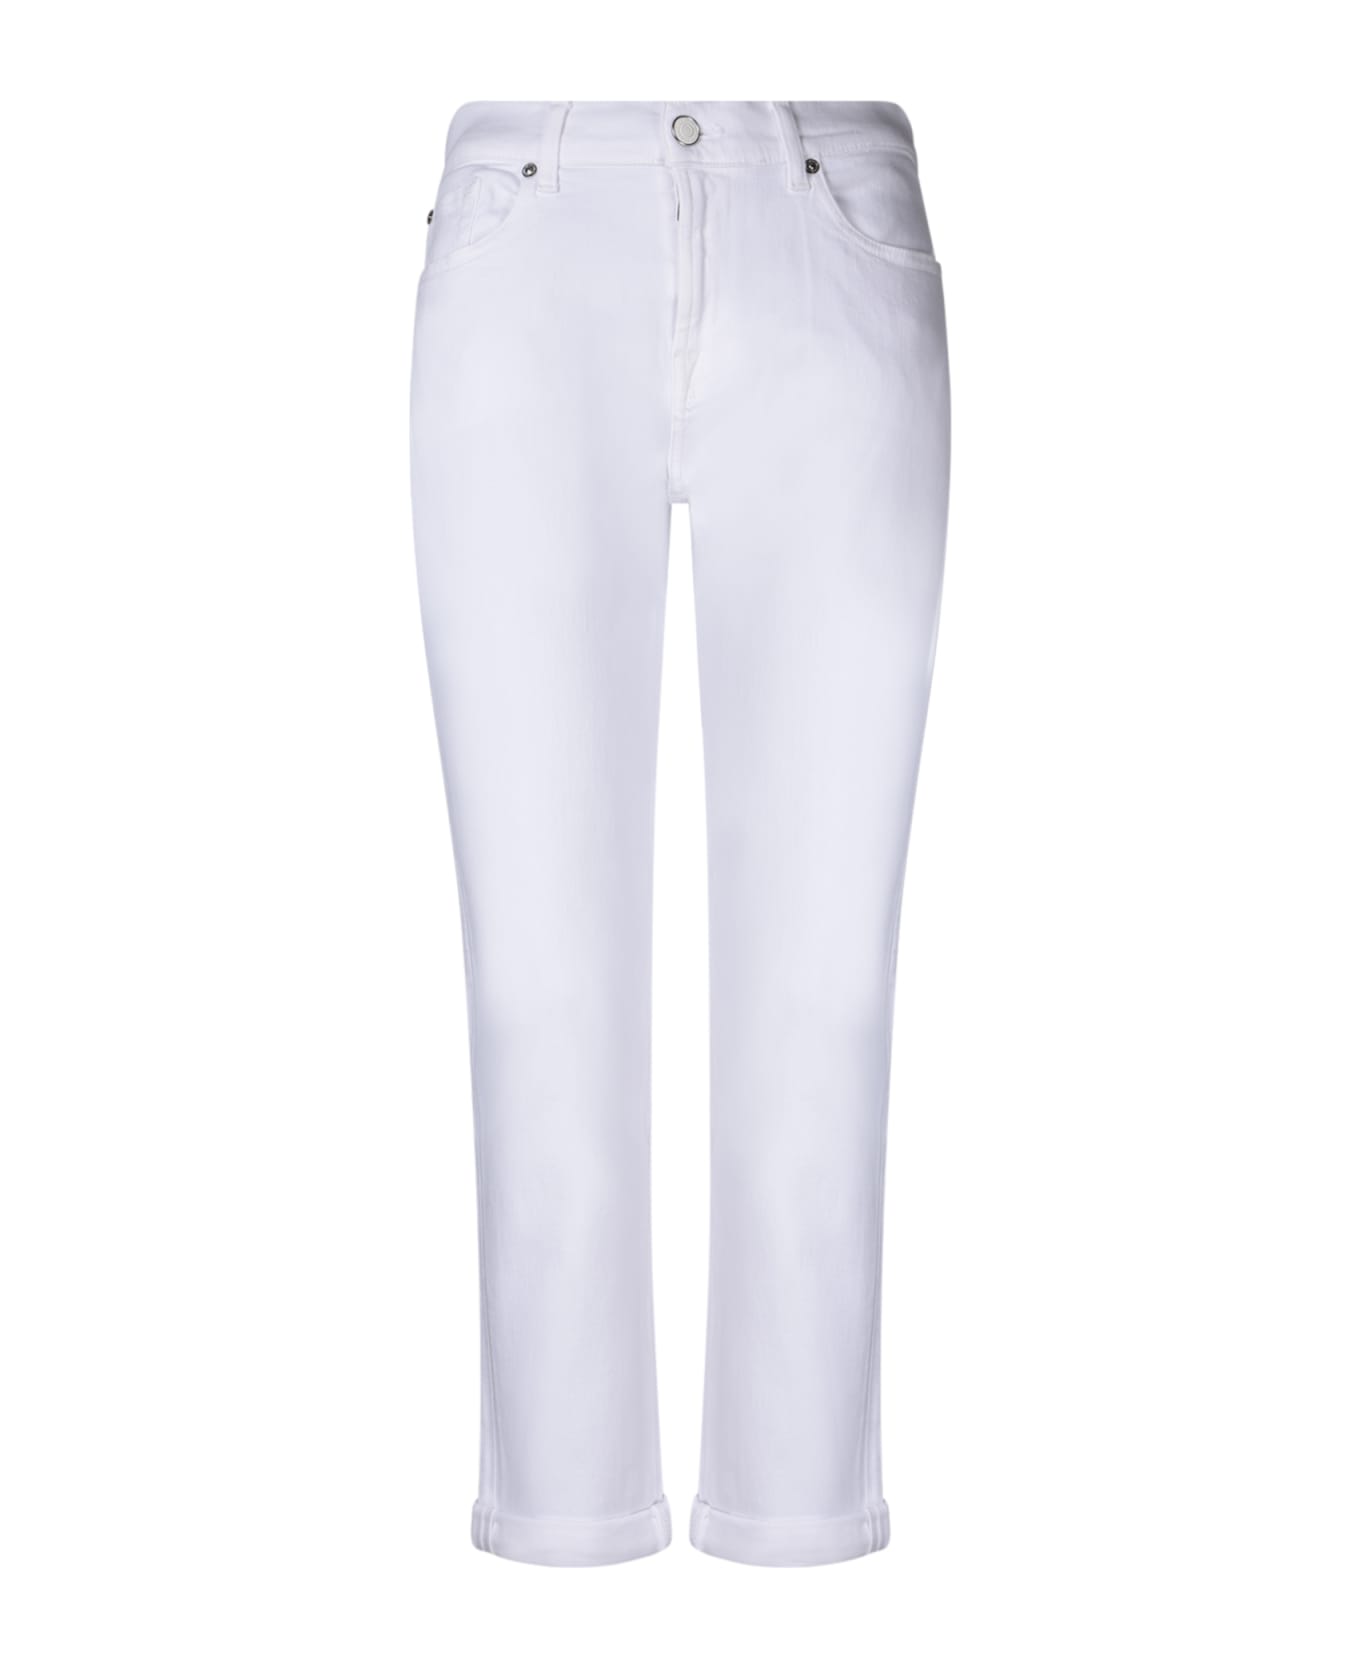 7 For All Mankind Josefina White Jeans - White デニム